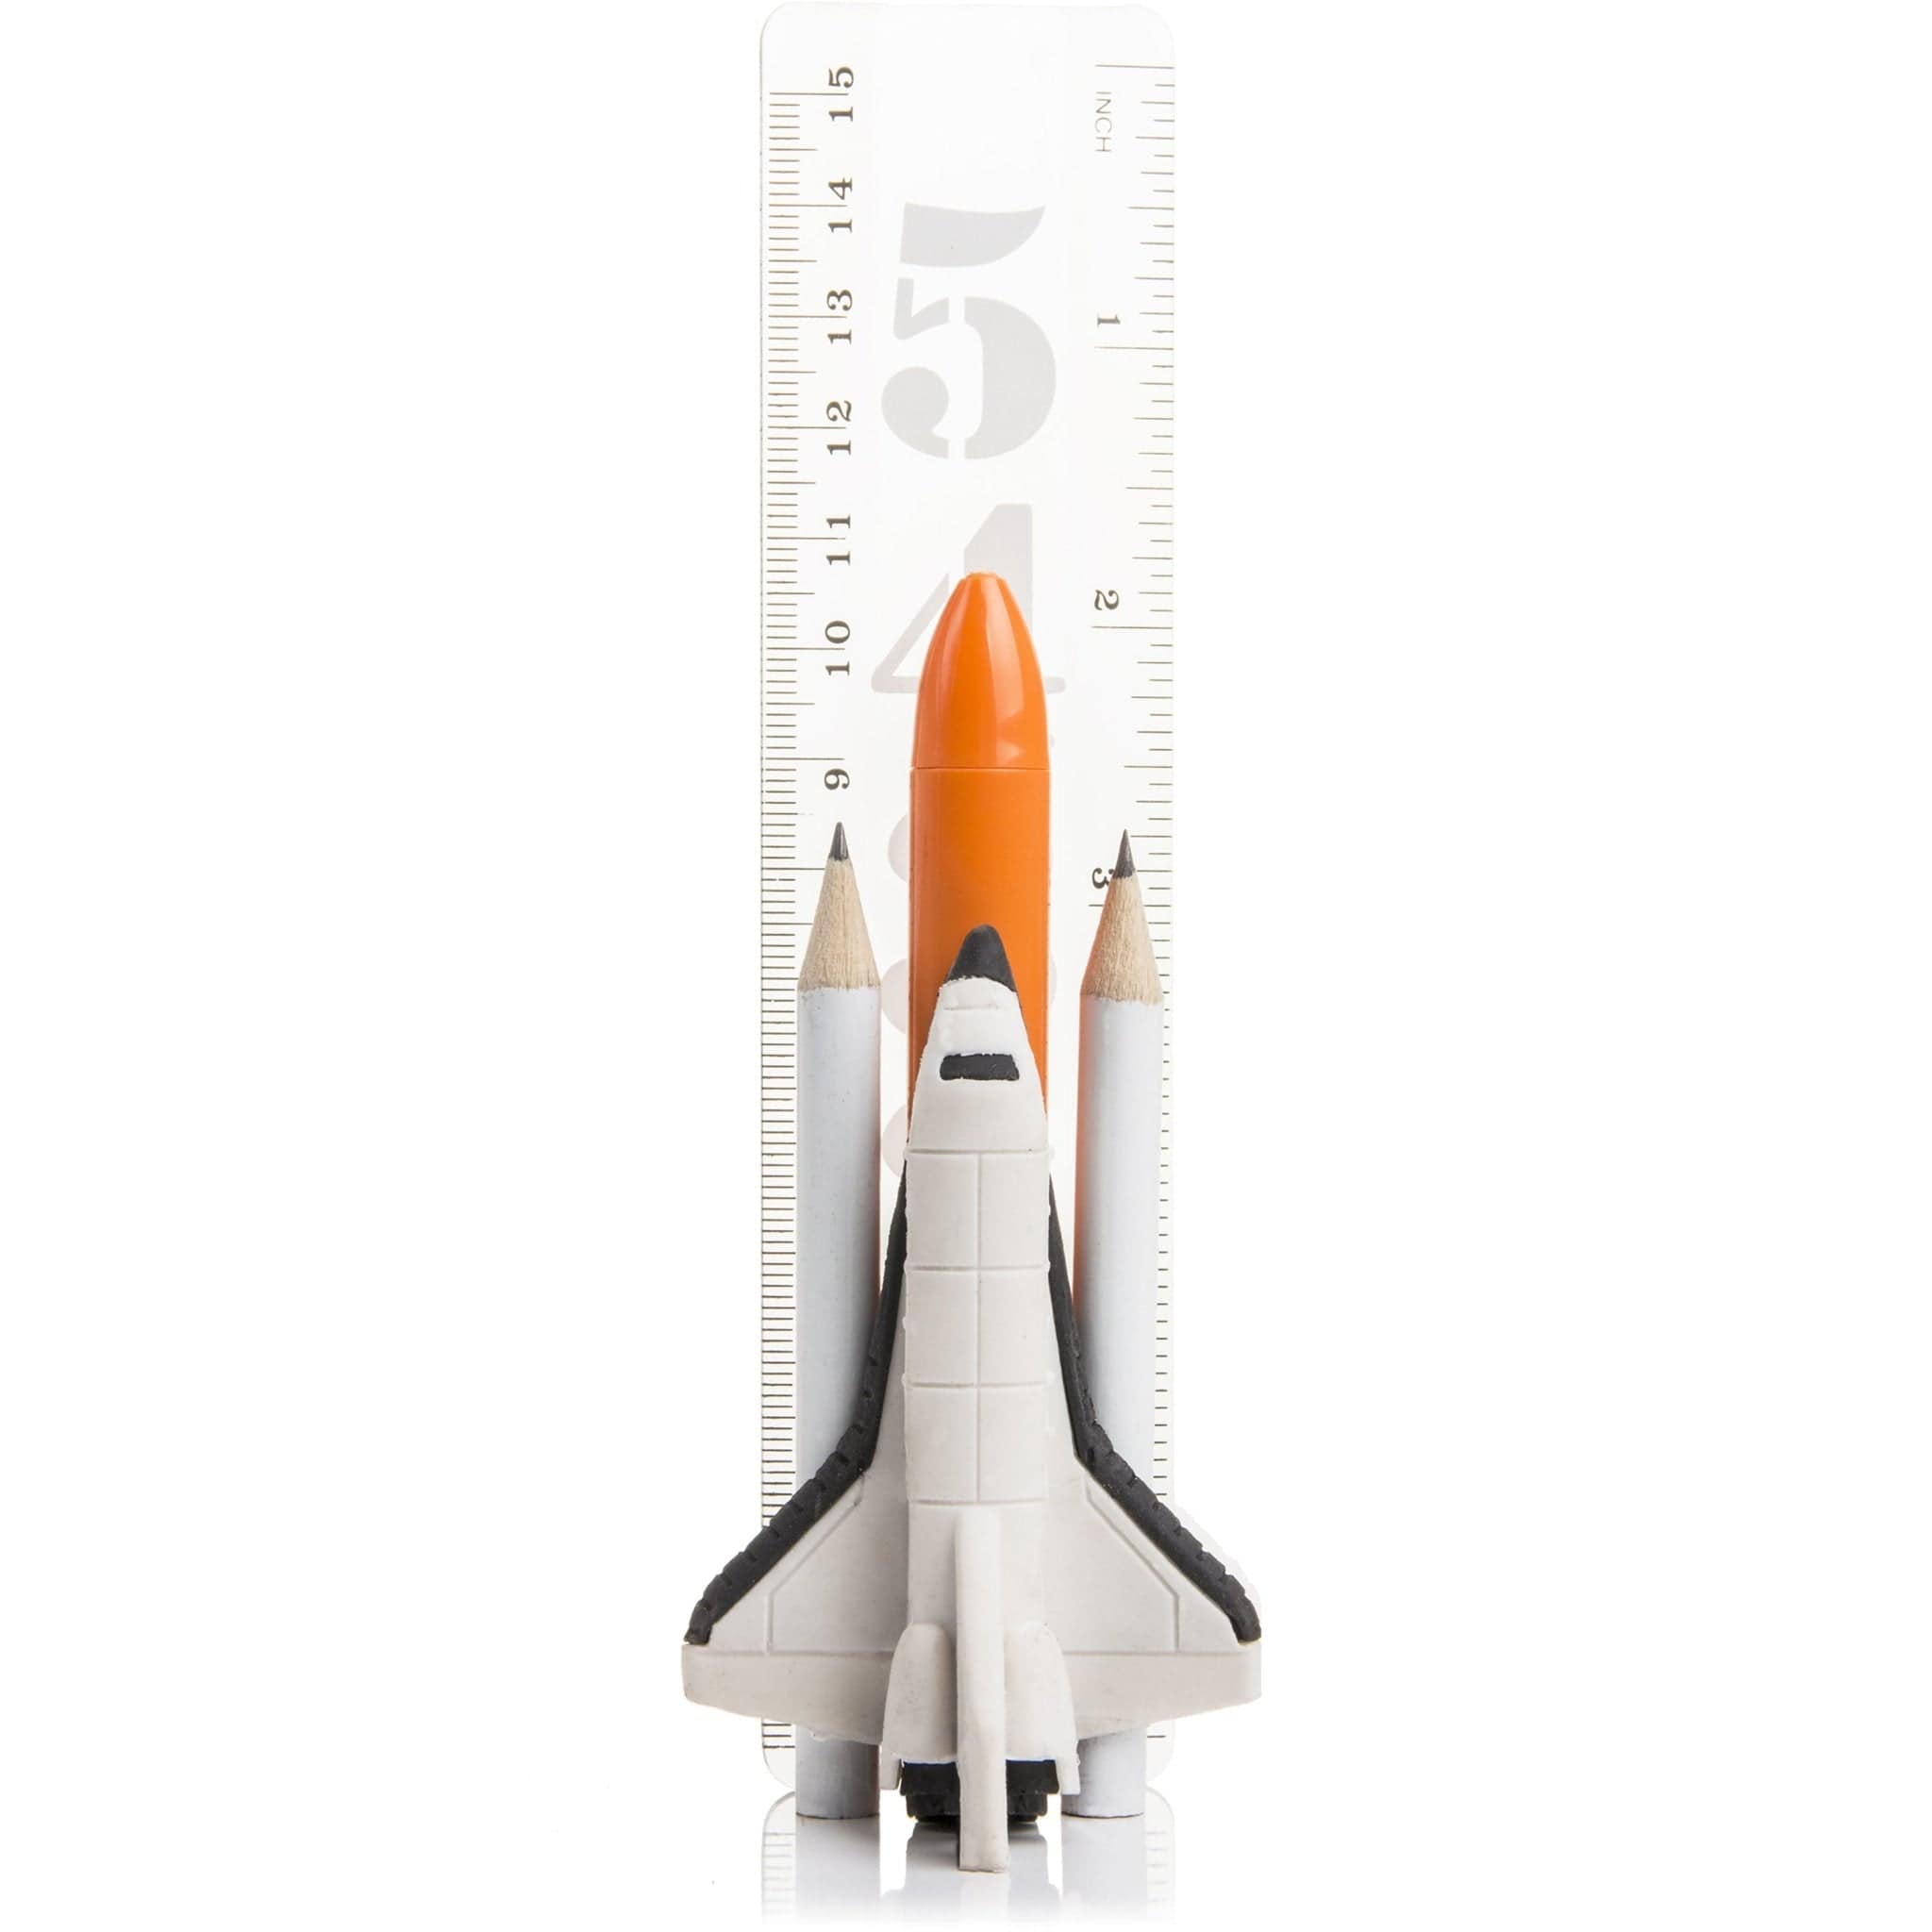 Space Shuttle Stationary Set - PilotMall.com